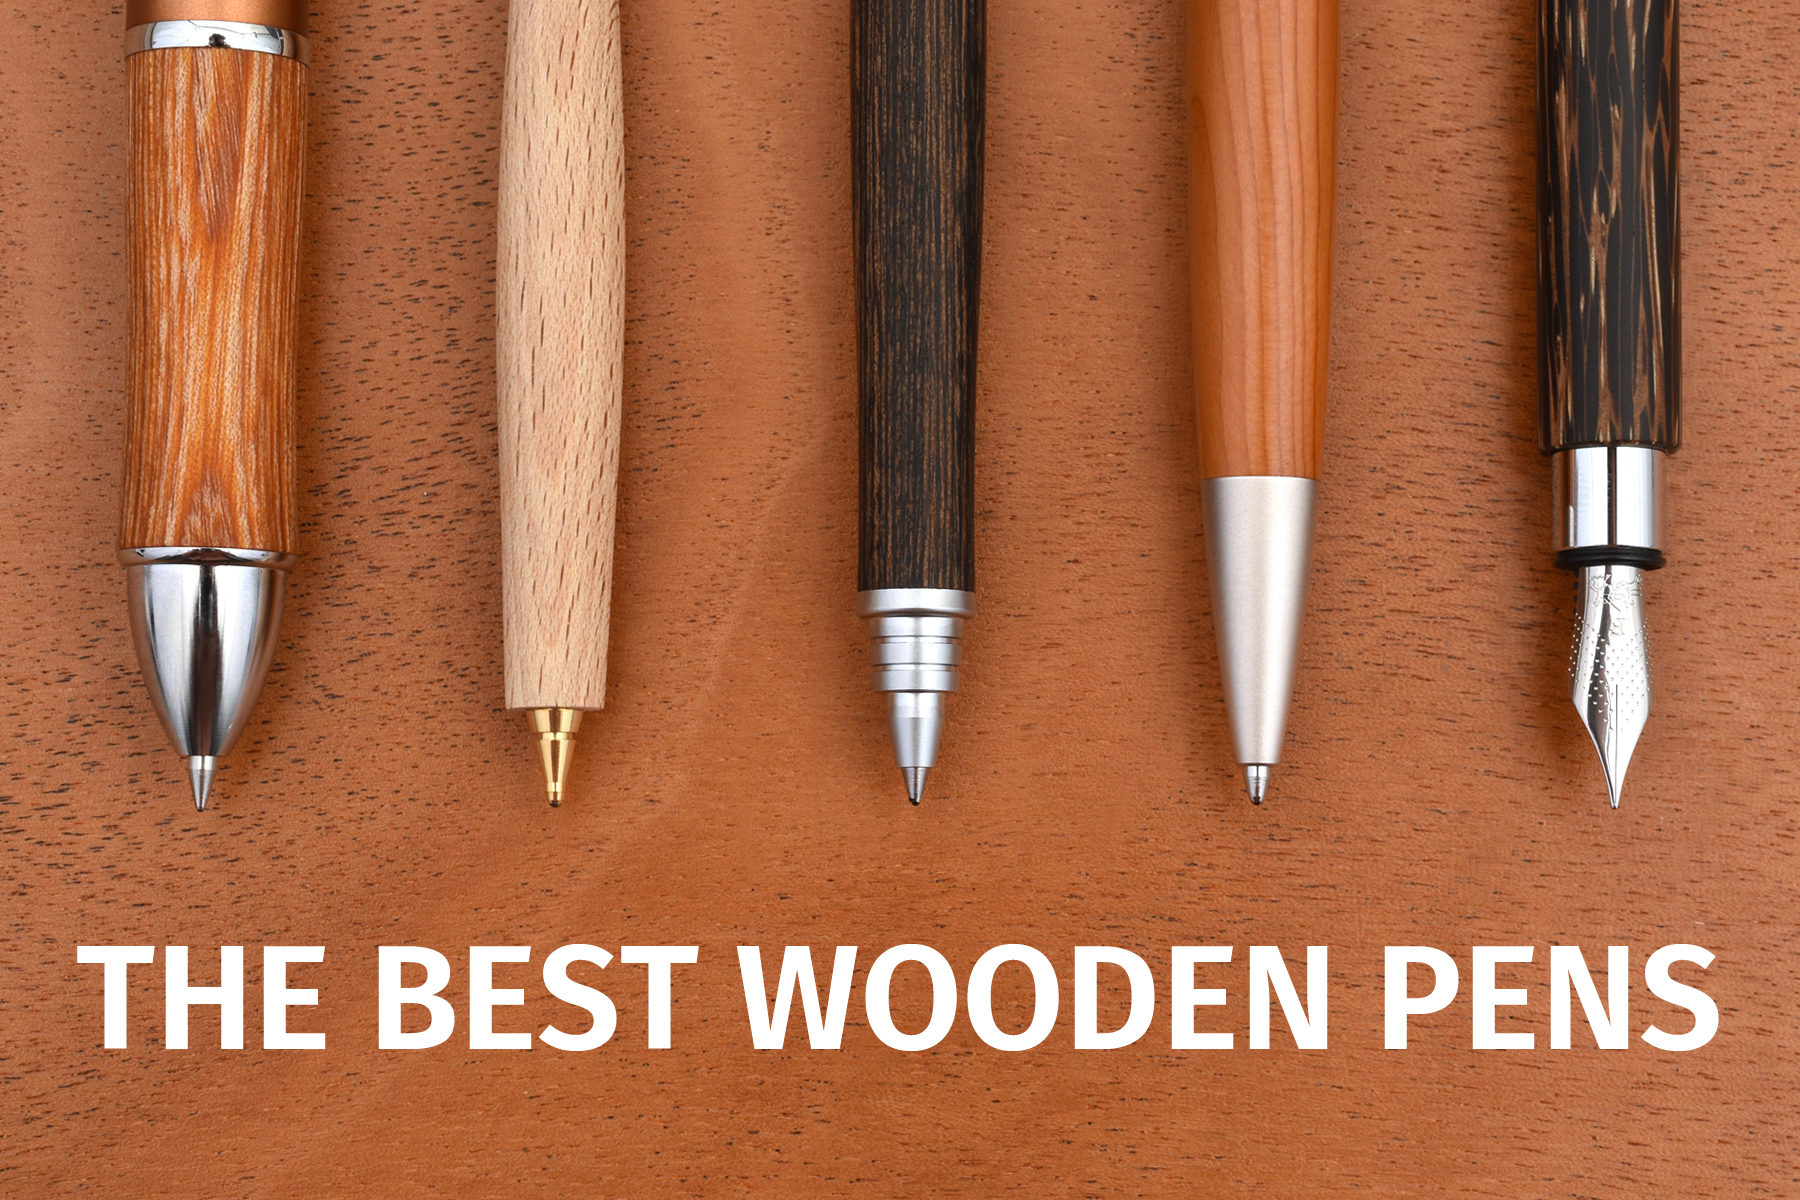 The Best Wooden Pens